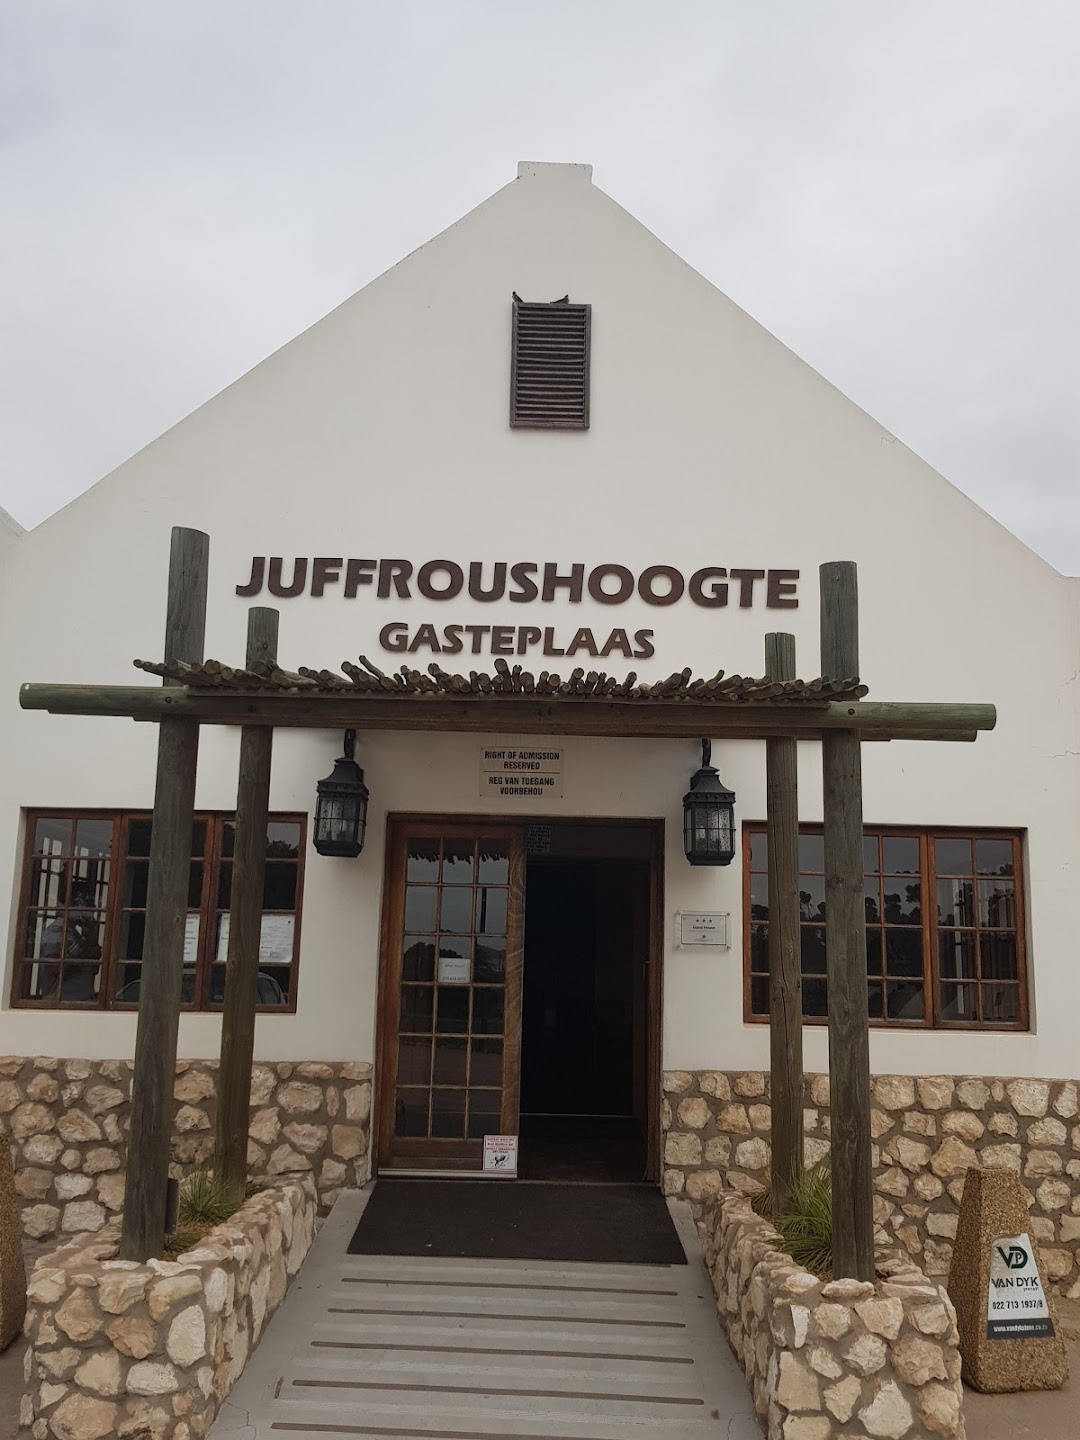 Juffroushoogte Guest Farm